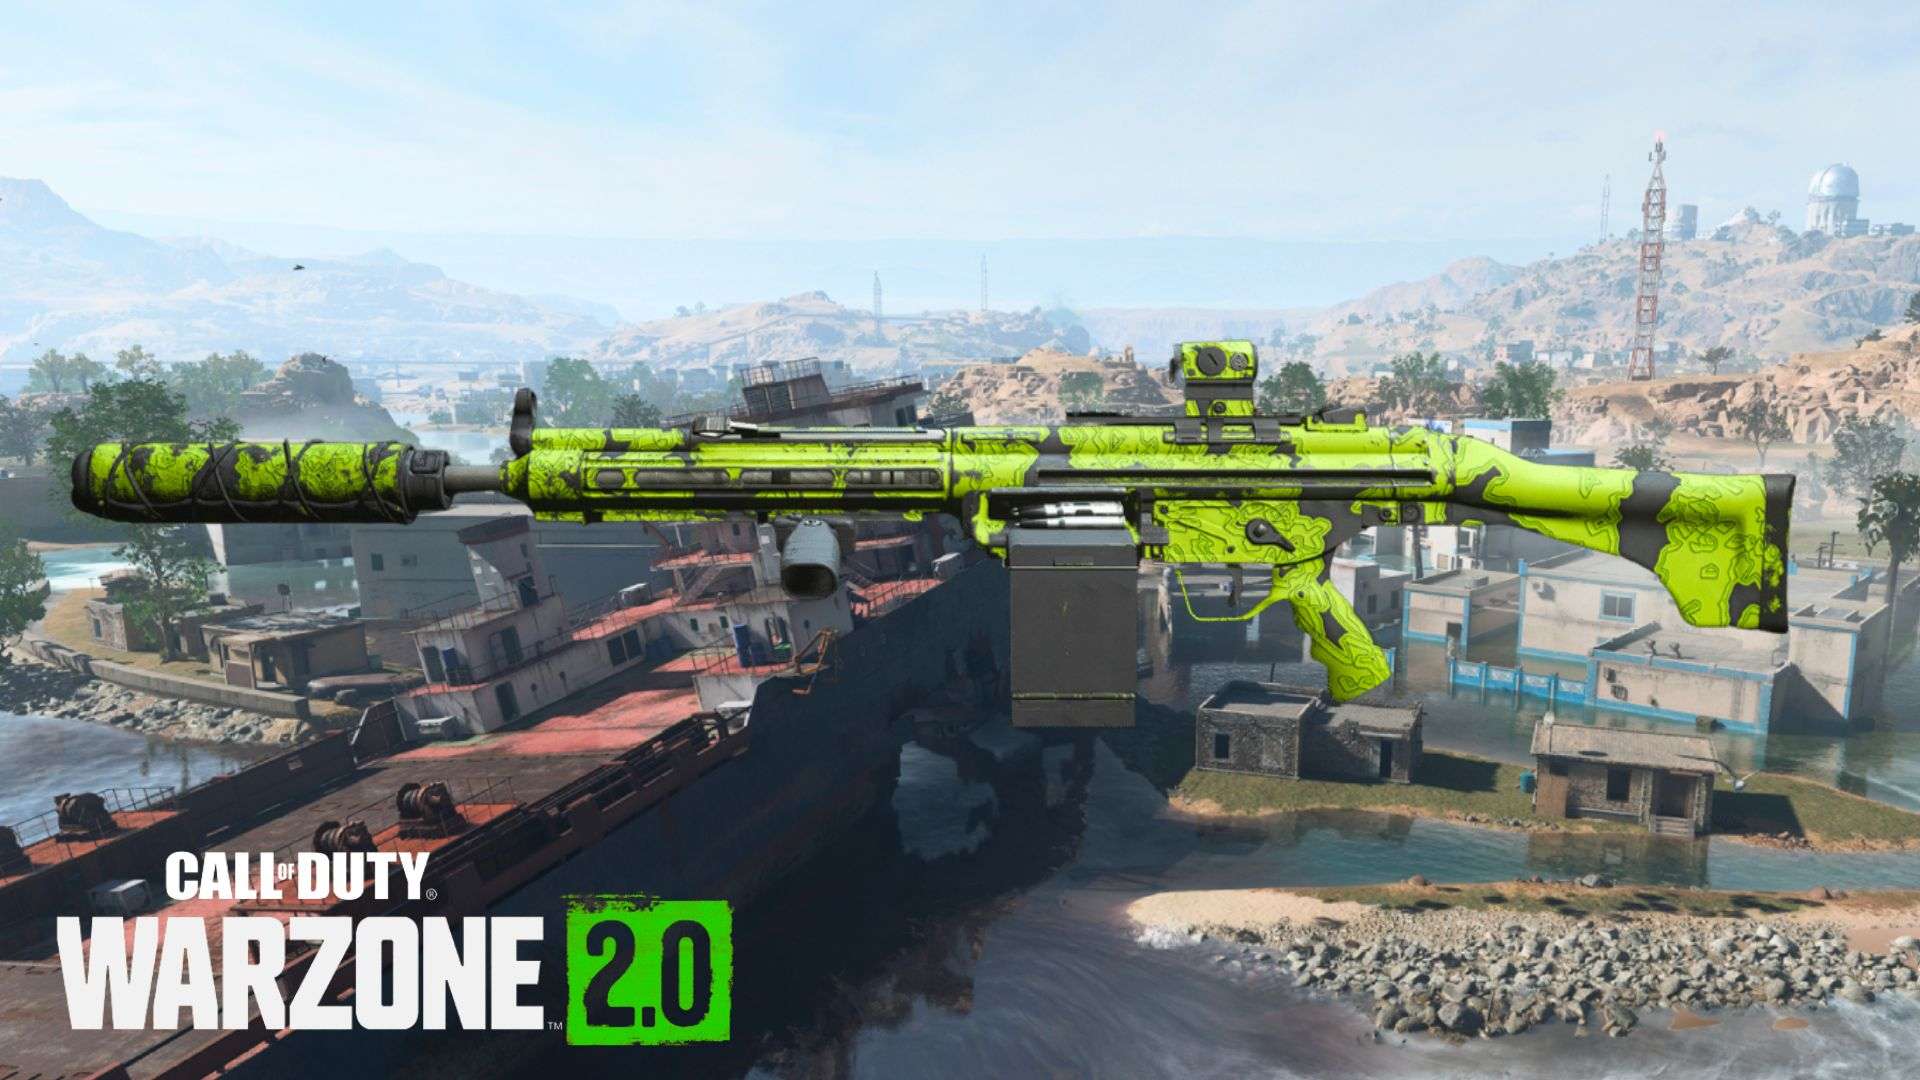 Rapp-H in green skin on Warzone 2 al-mazrah map